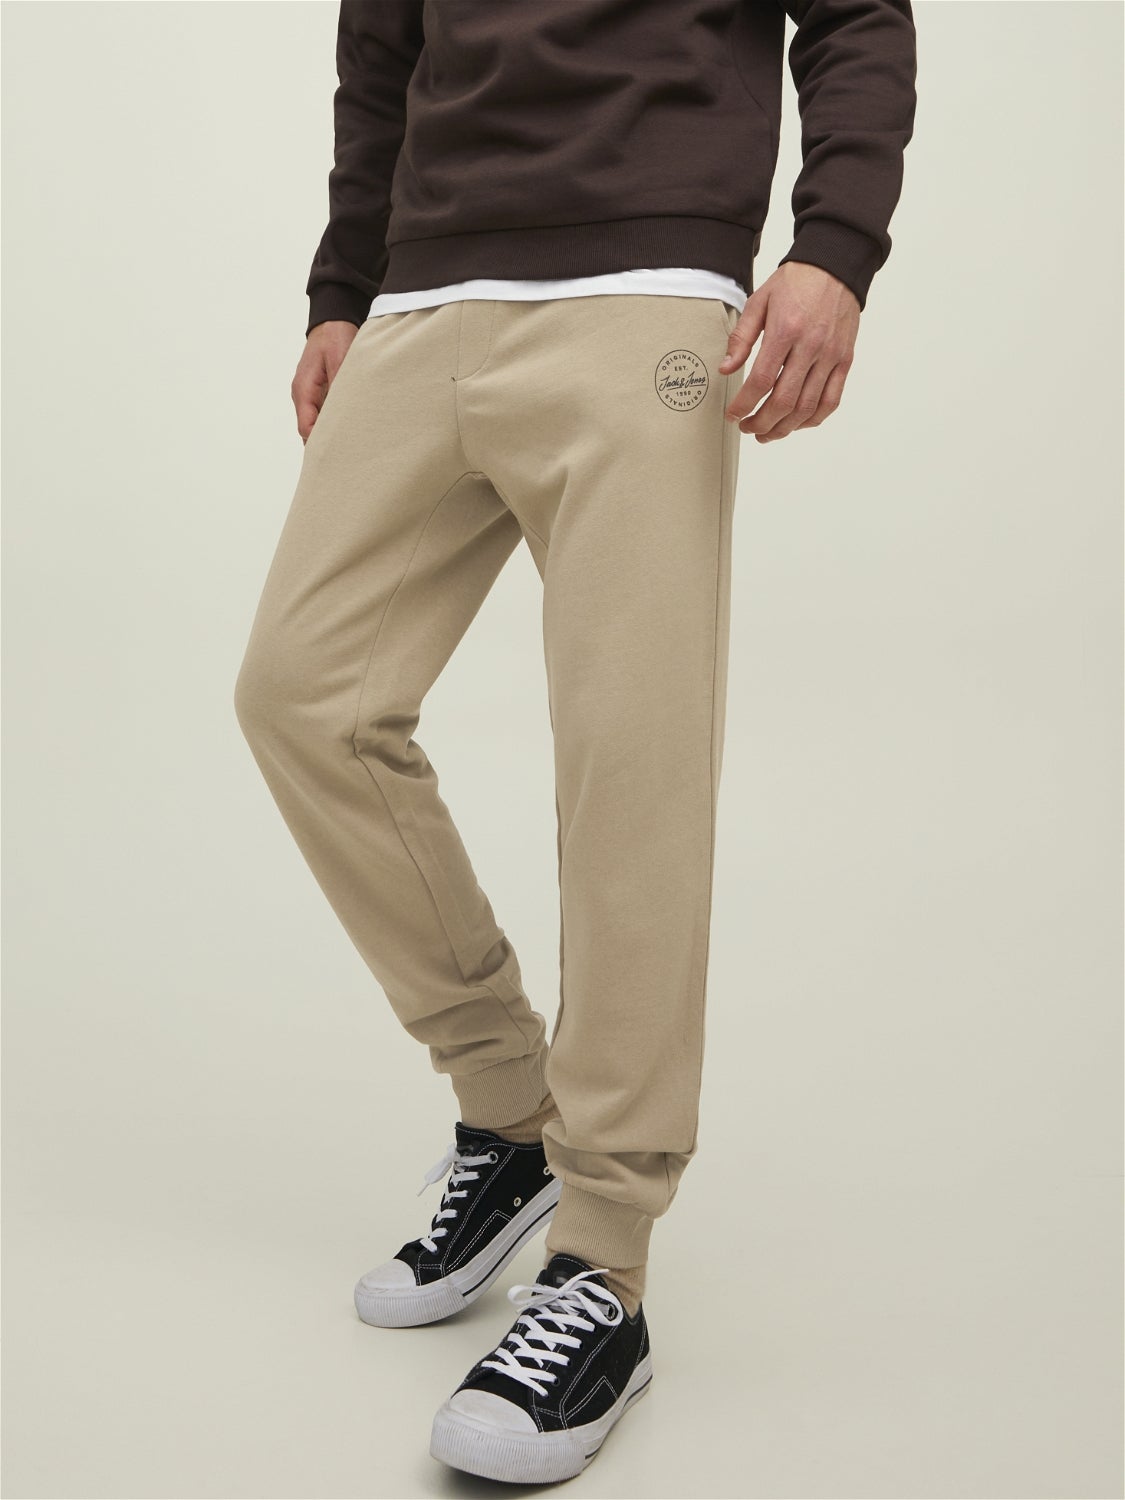 Jack & Jones slacks Brown M discount 62% MEN FASHION Trousers Sports 